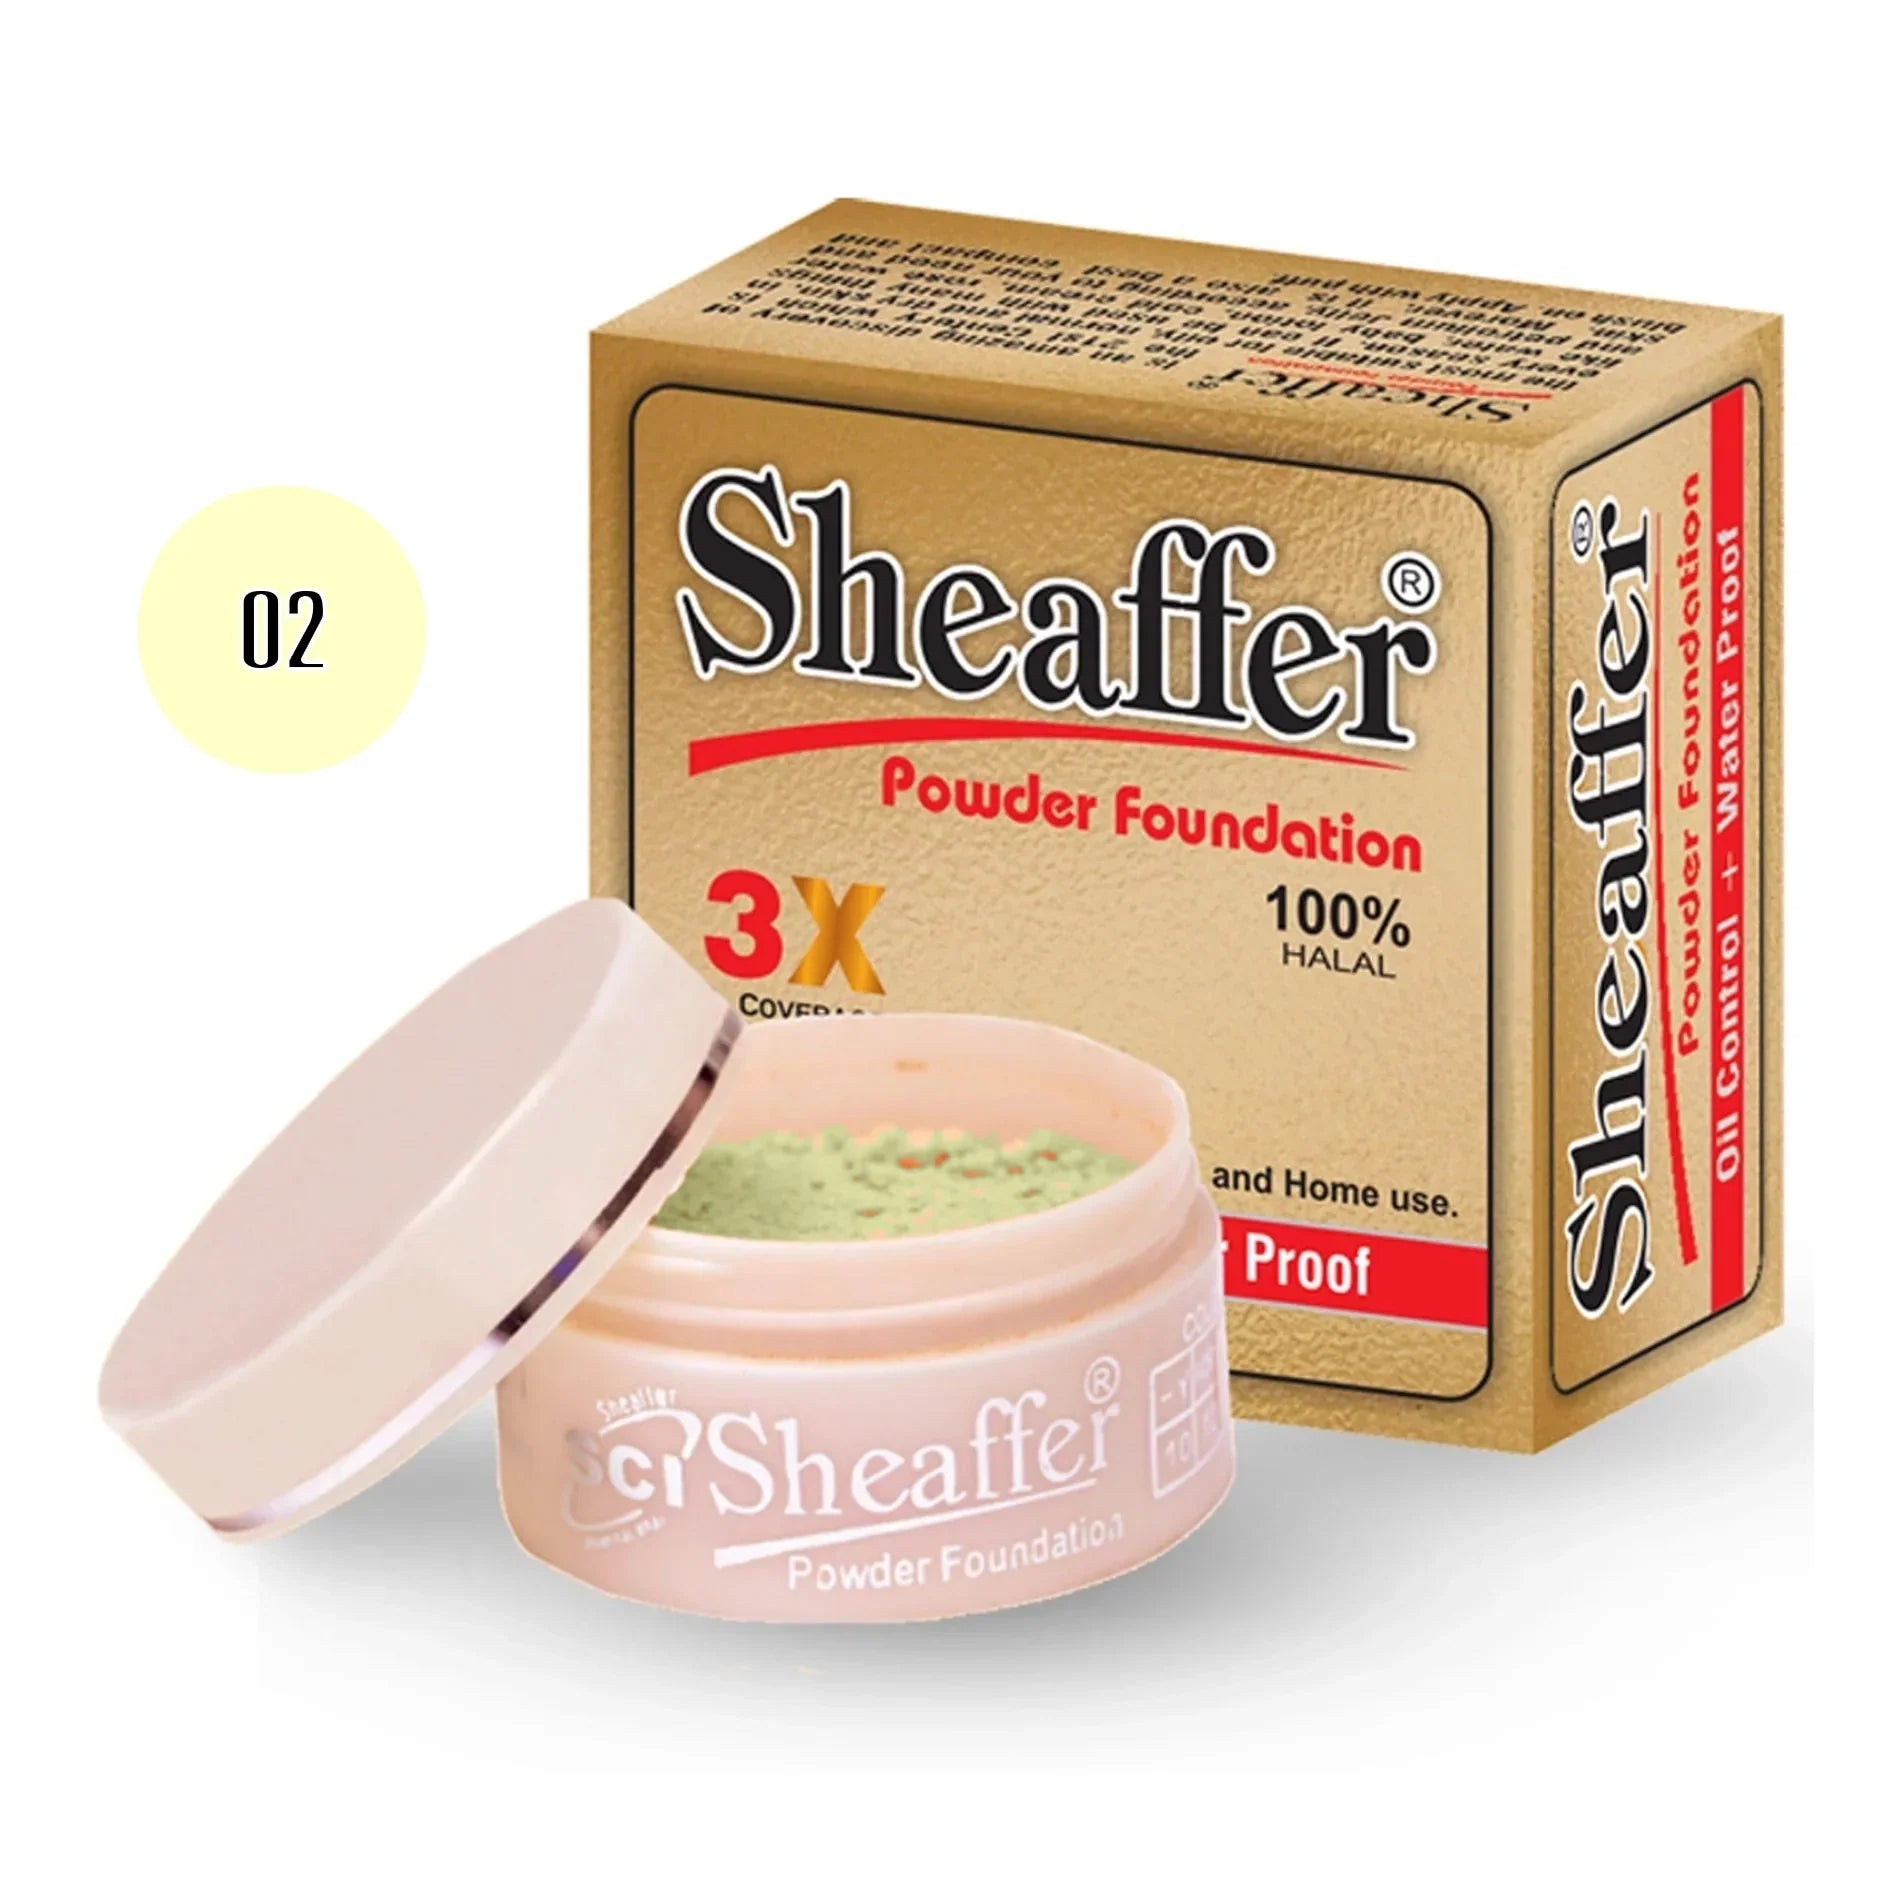 Sheaffer Powder Foundation Base P1 Shade - Retailershop - Online Shopping Center